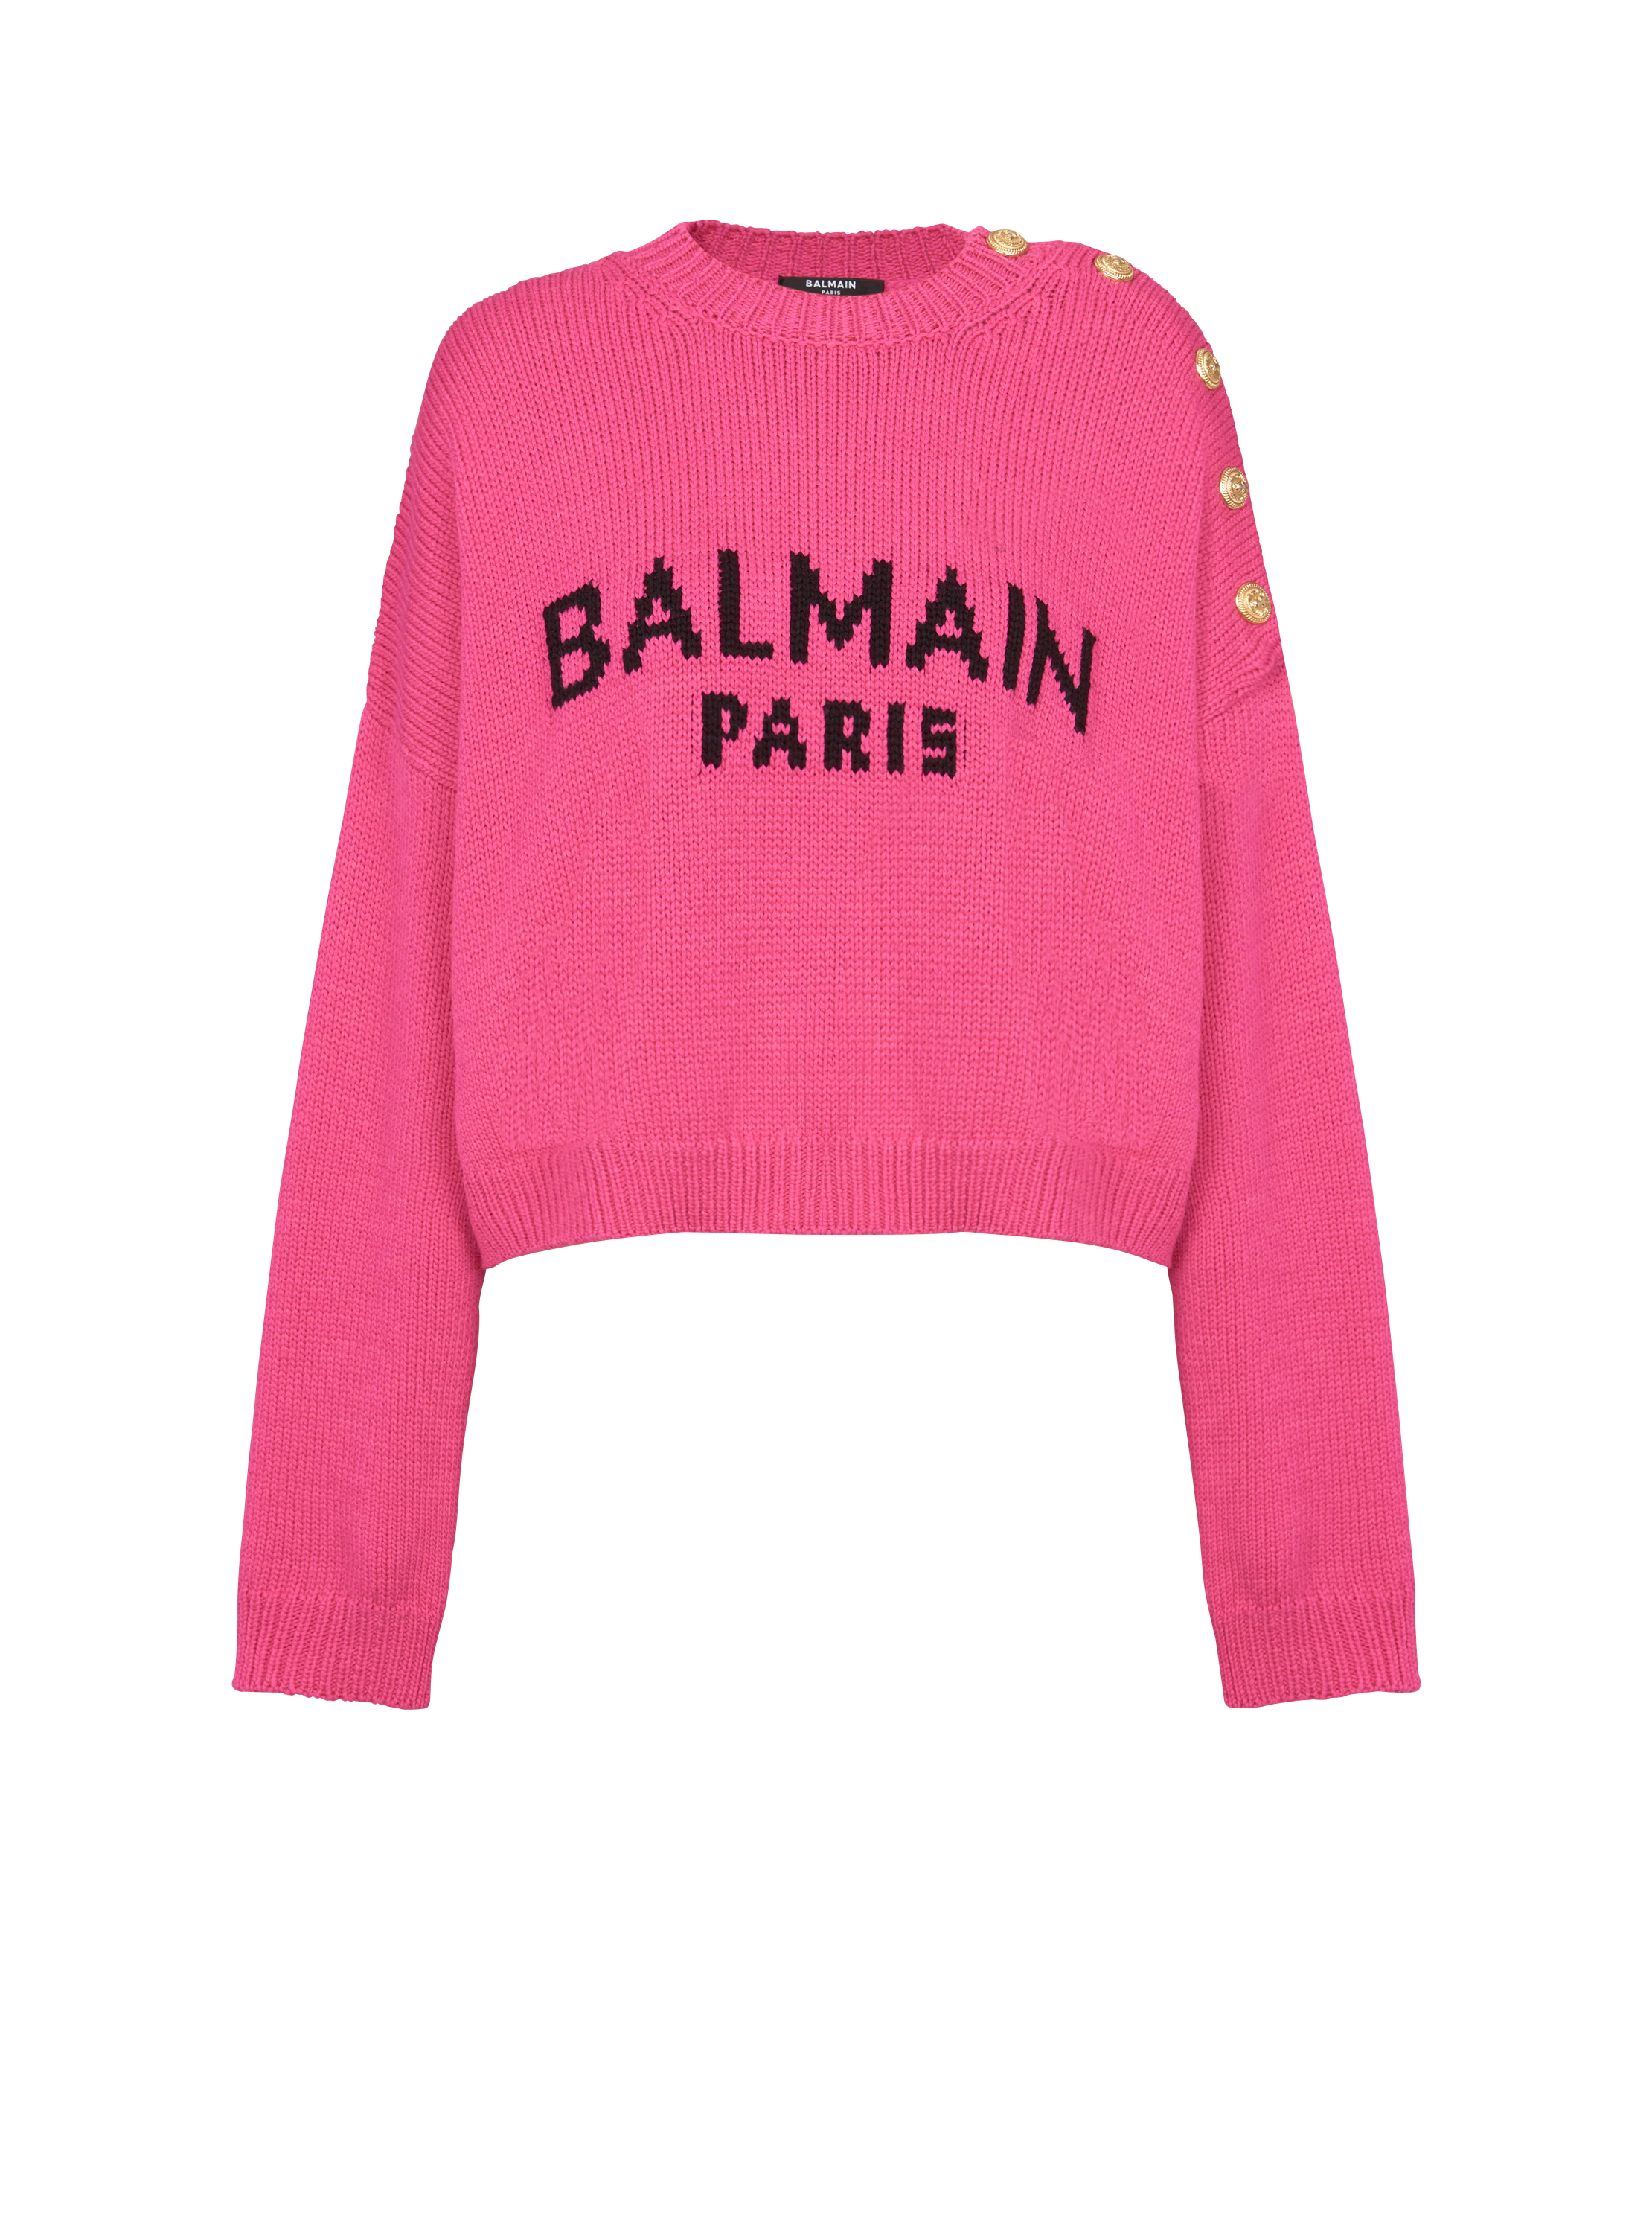 Kurzer Strickpullover mit Balmain-Logo, rosa, hi-res